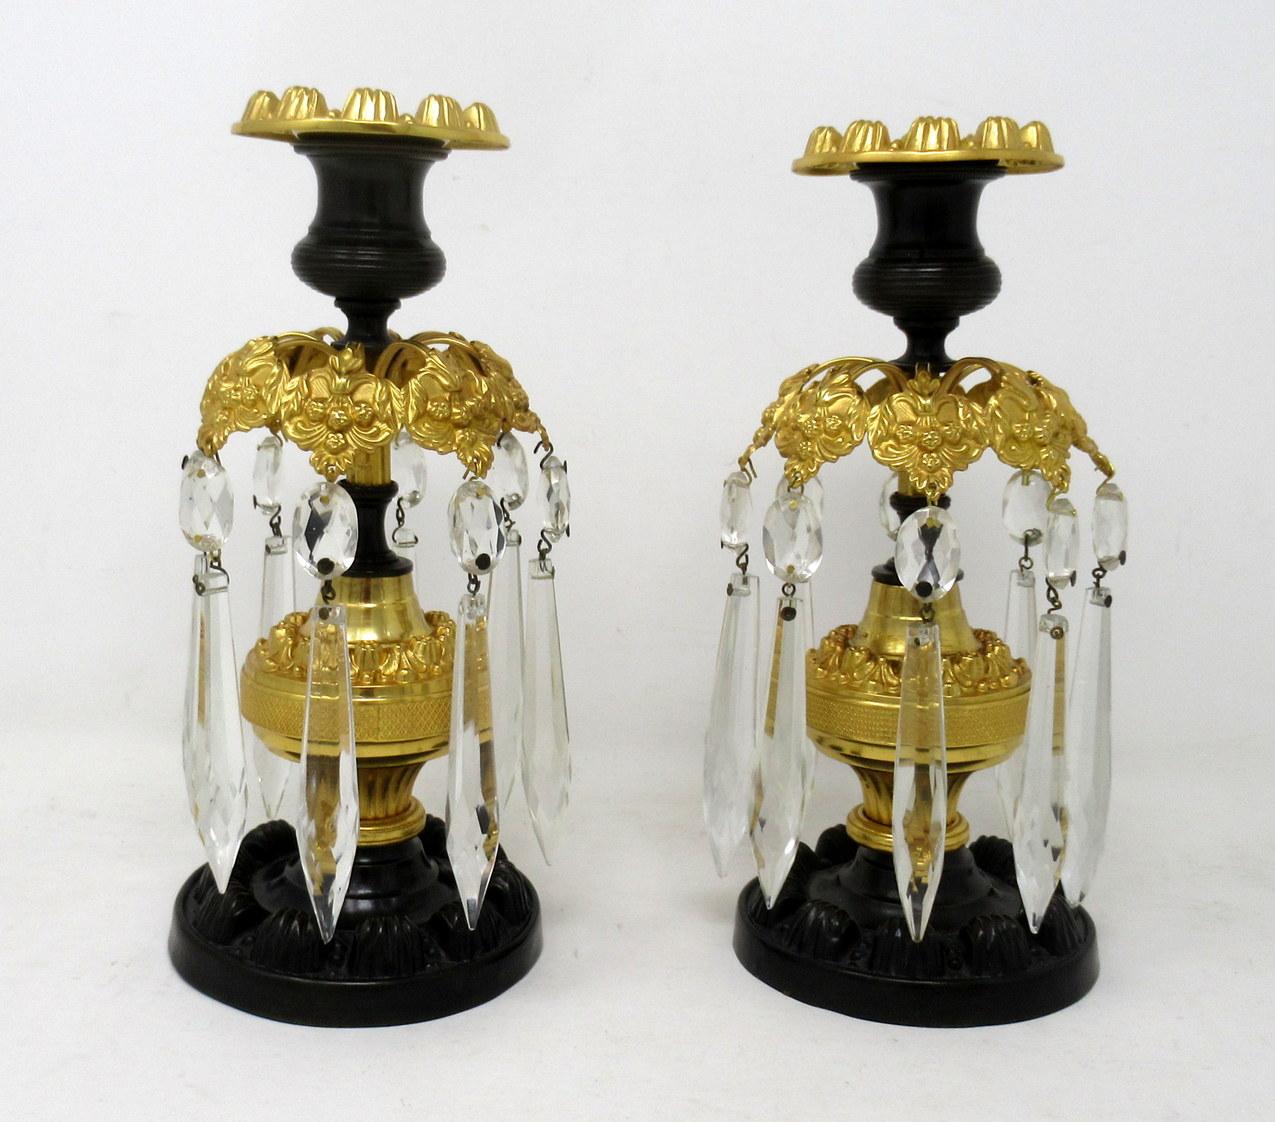 Cast Pair of English Regency Ormolu Bronze Lusters Candlesticks Candelabra 19 Century